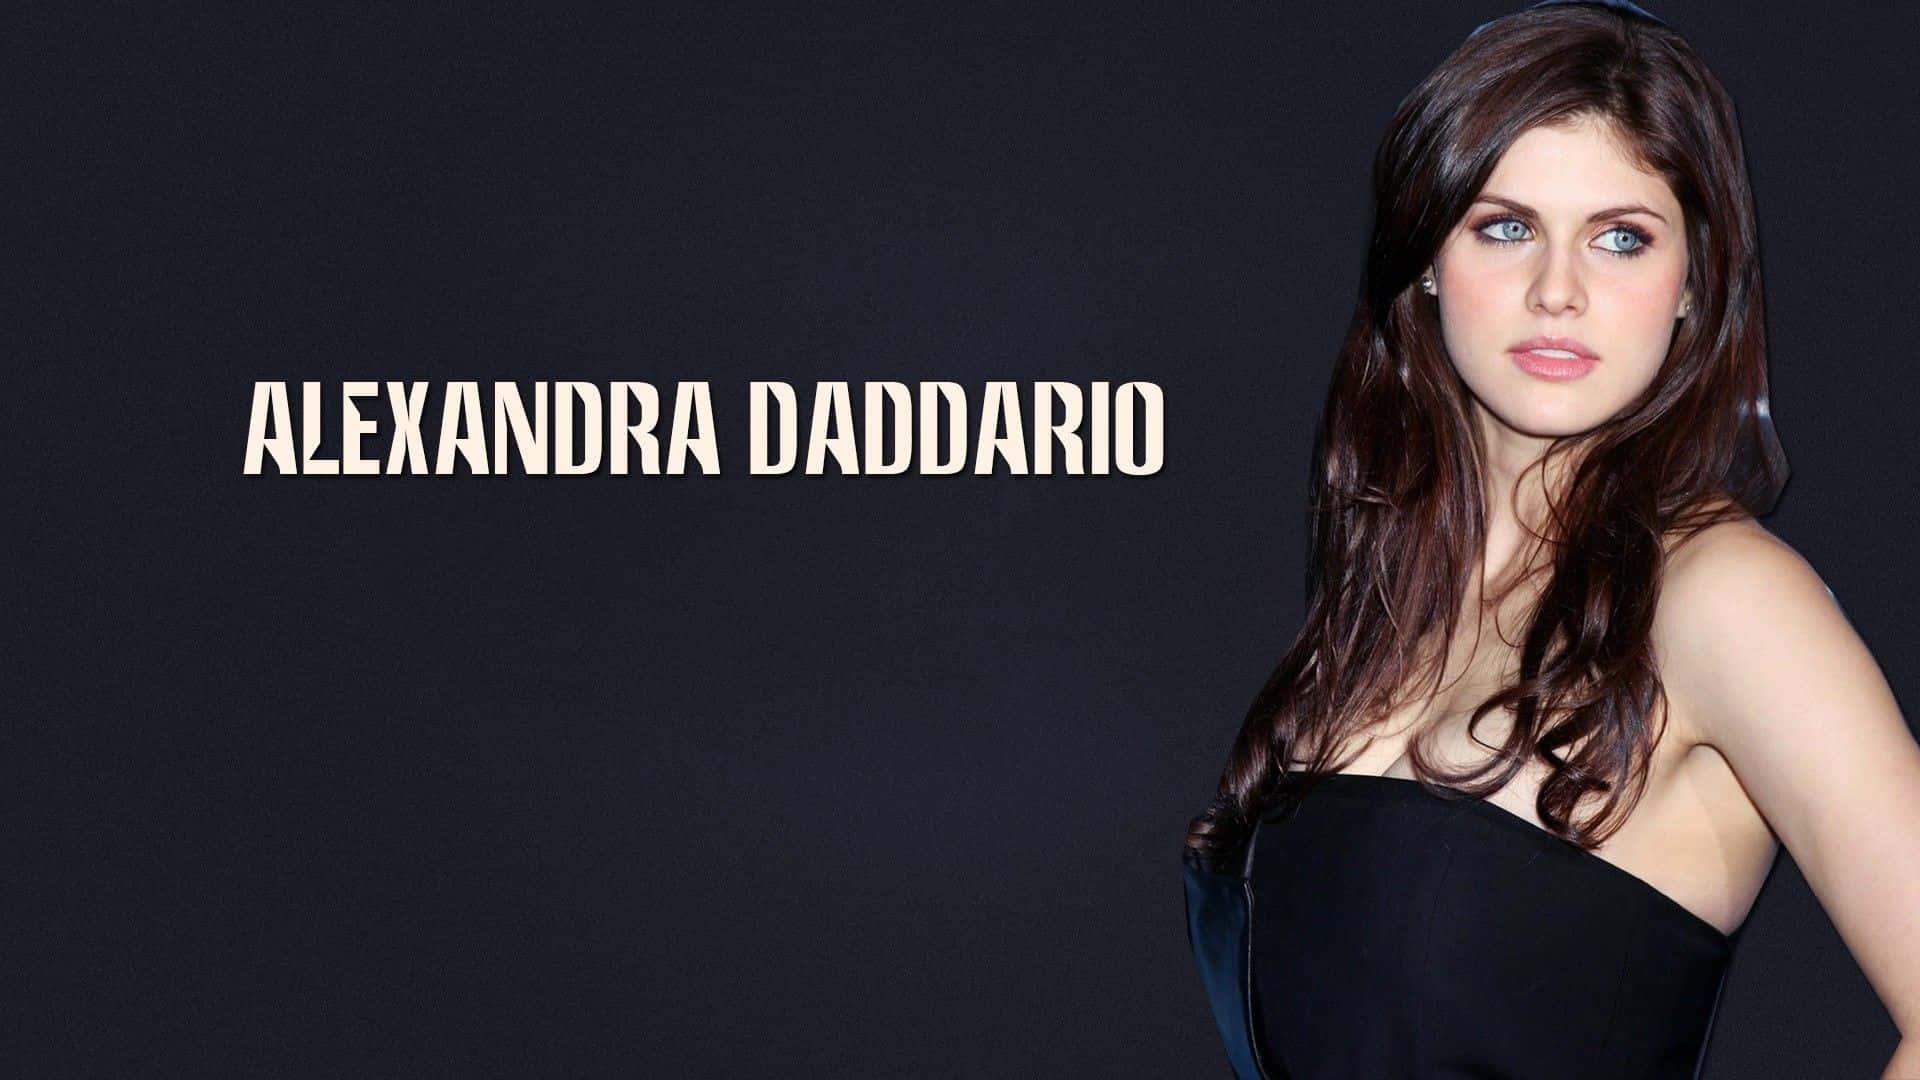 Stunning Alexandra Daddario in a candid portrait